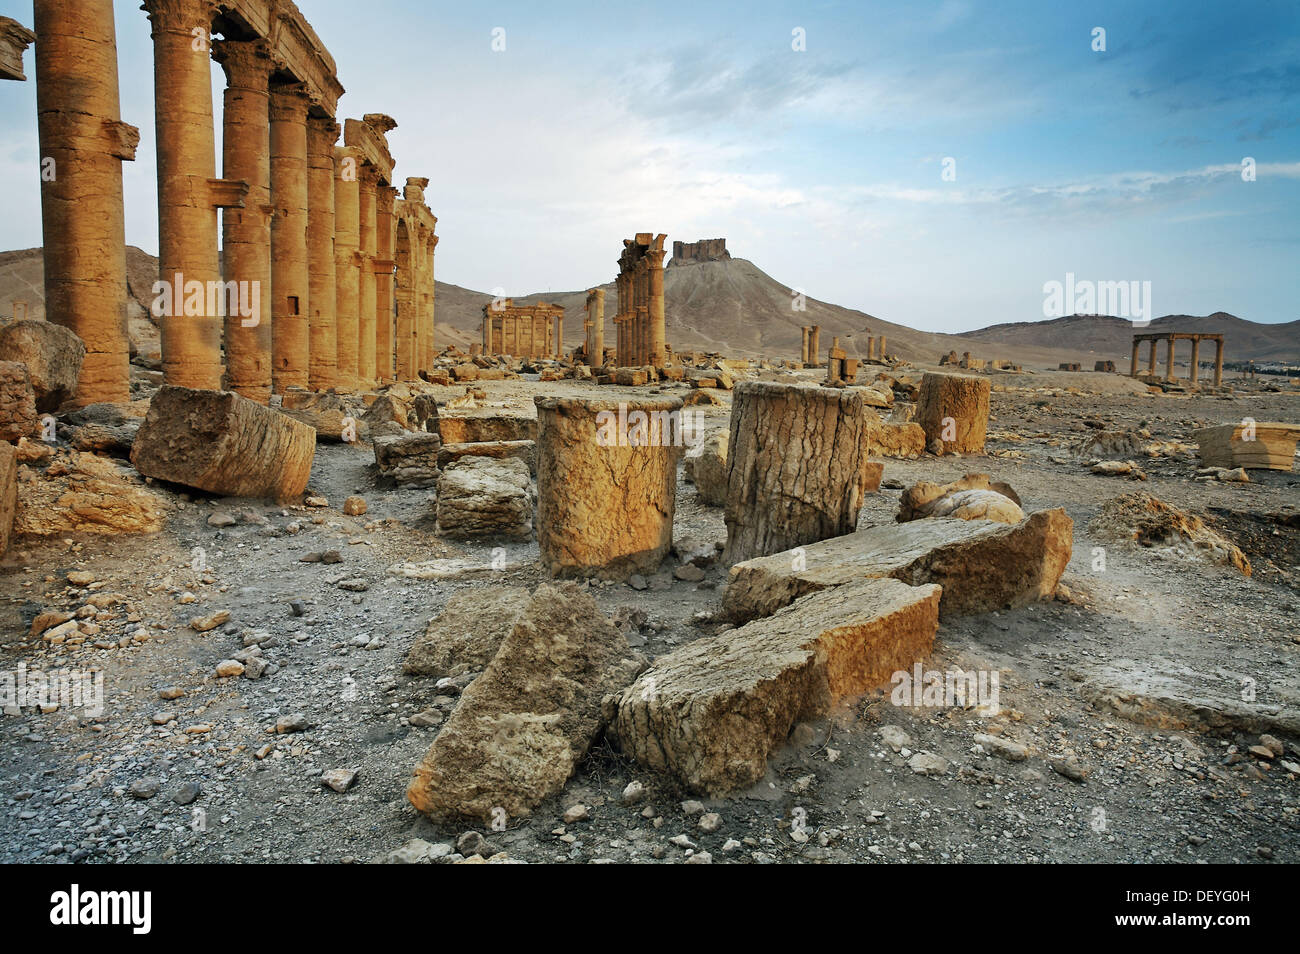 Ruins of the old Greco-roman city of Palmyra, Syria Stock Photo